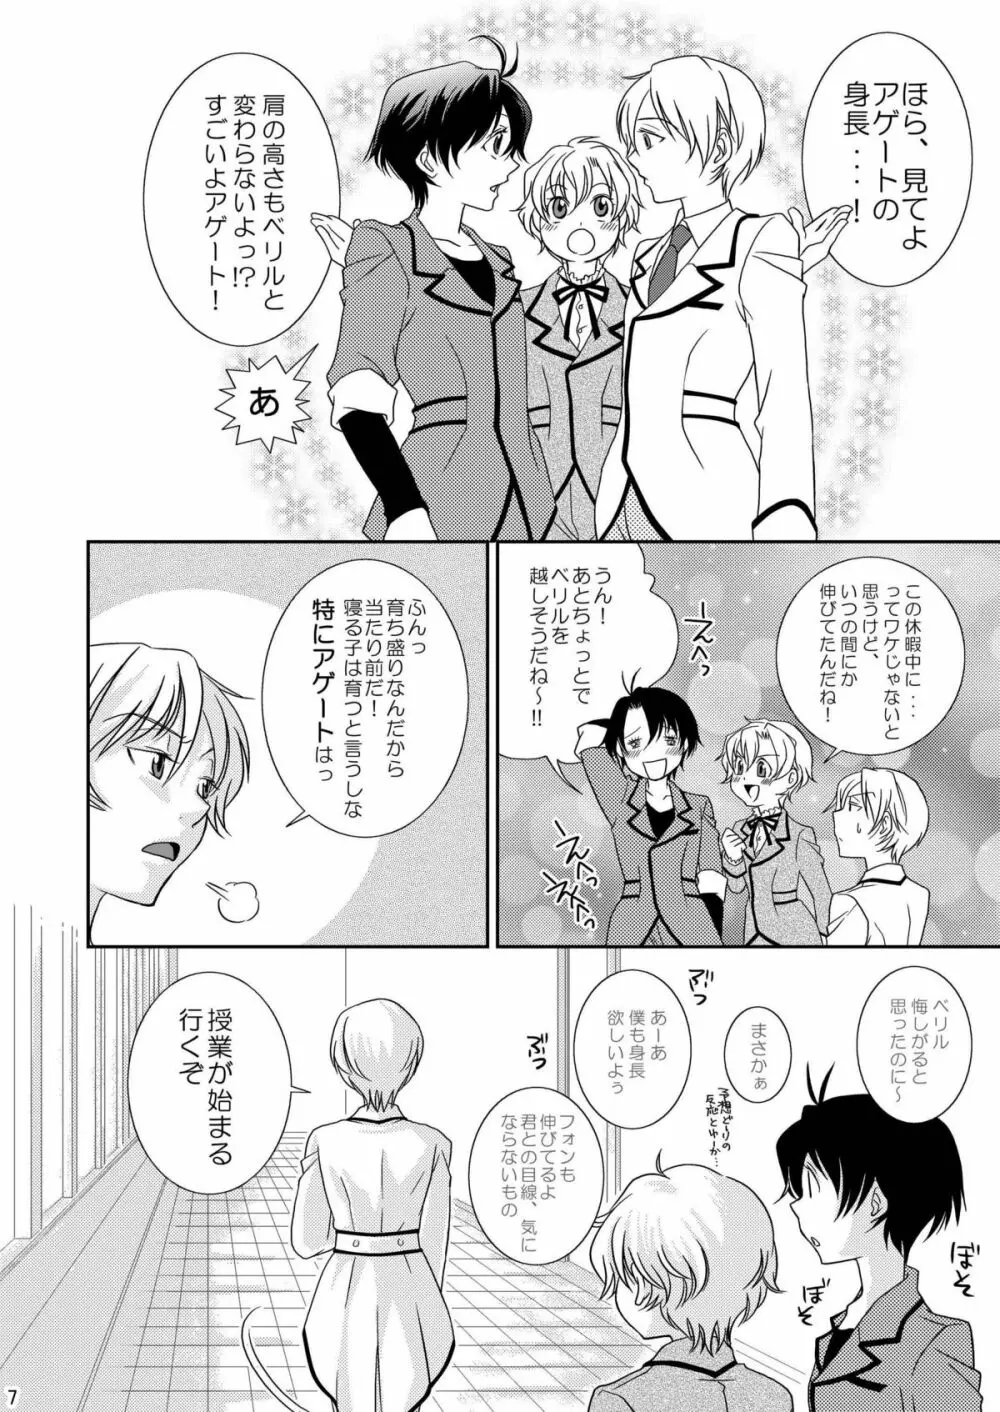 Re: ぷれい2 - page7